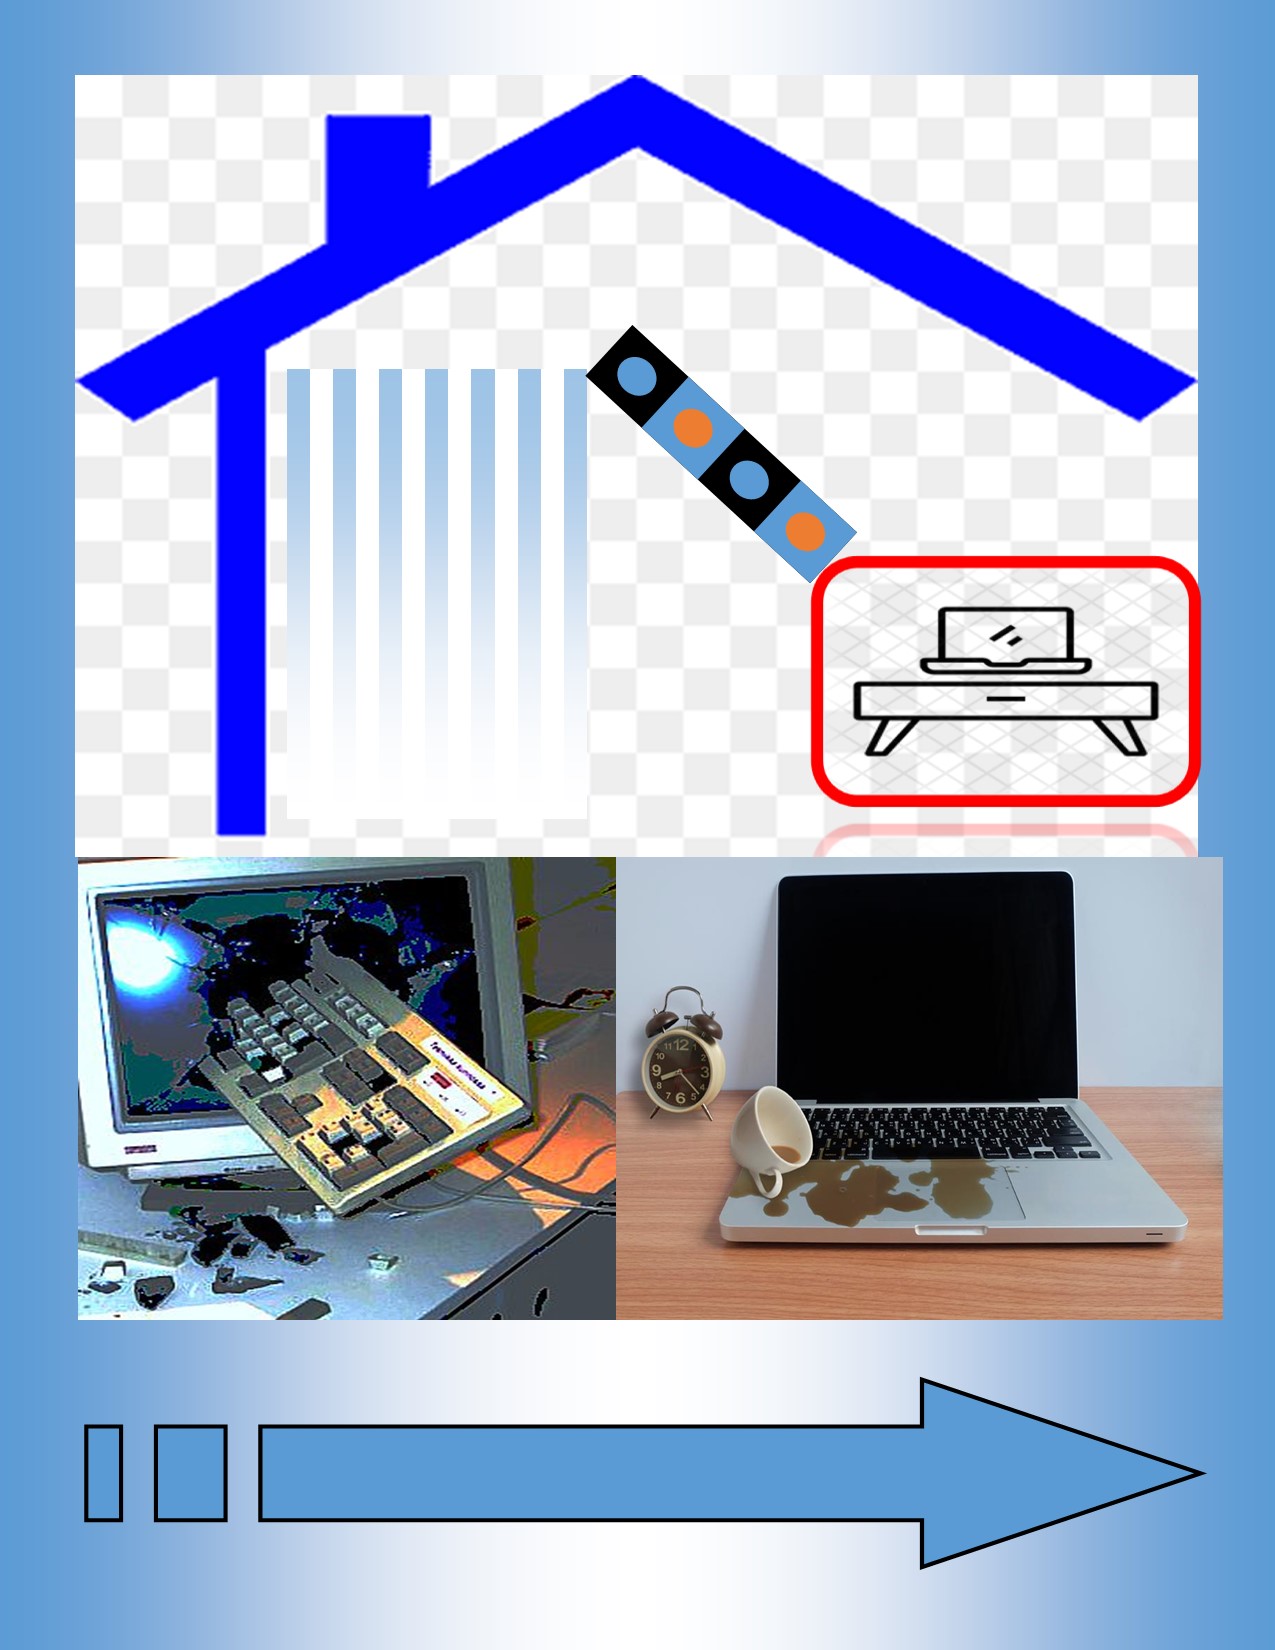 Neighborhood Computers - is using www.repero.me, a repair shop software